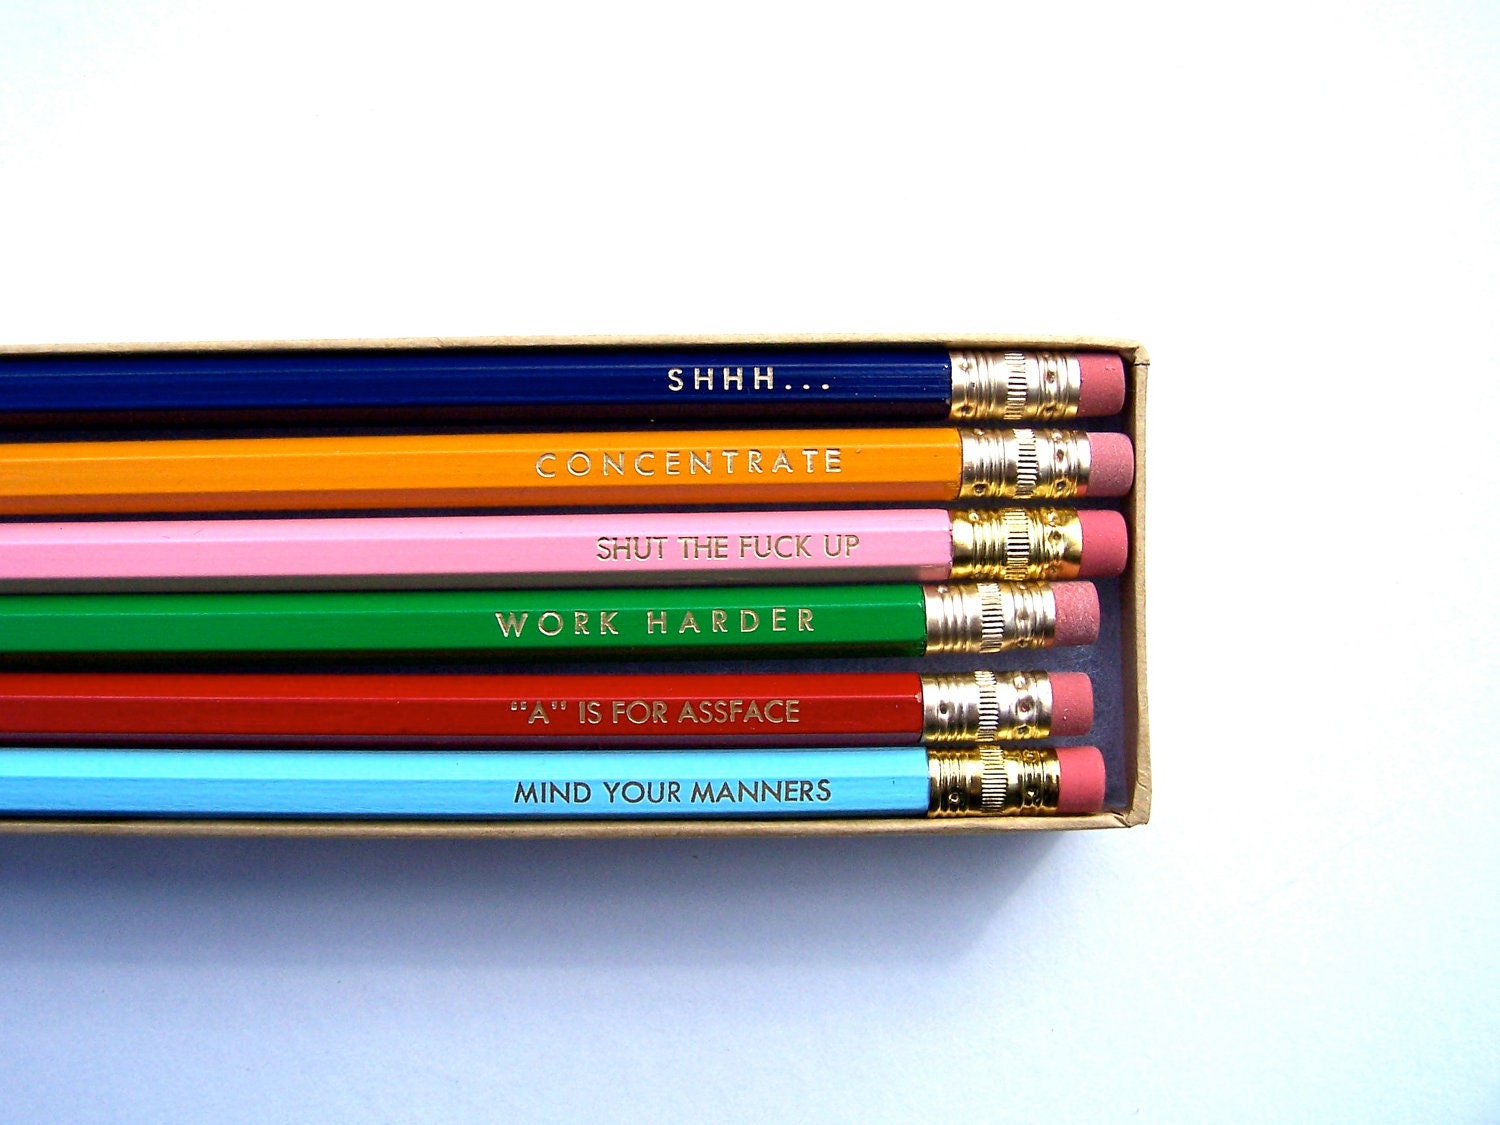 PENCILS (6) - back to school pack - GRAPHITE hex pencils